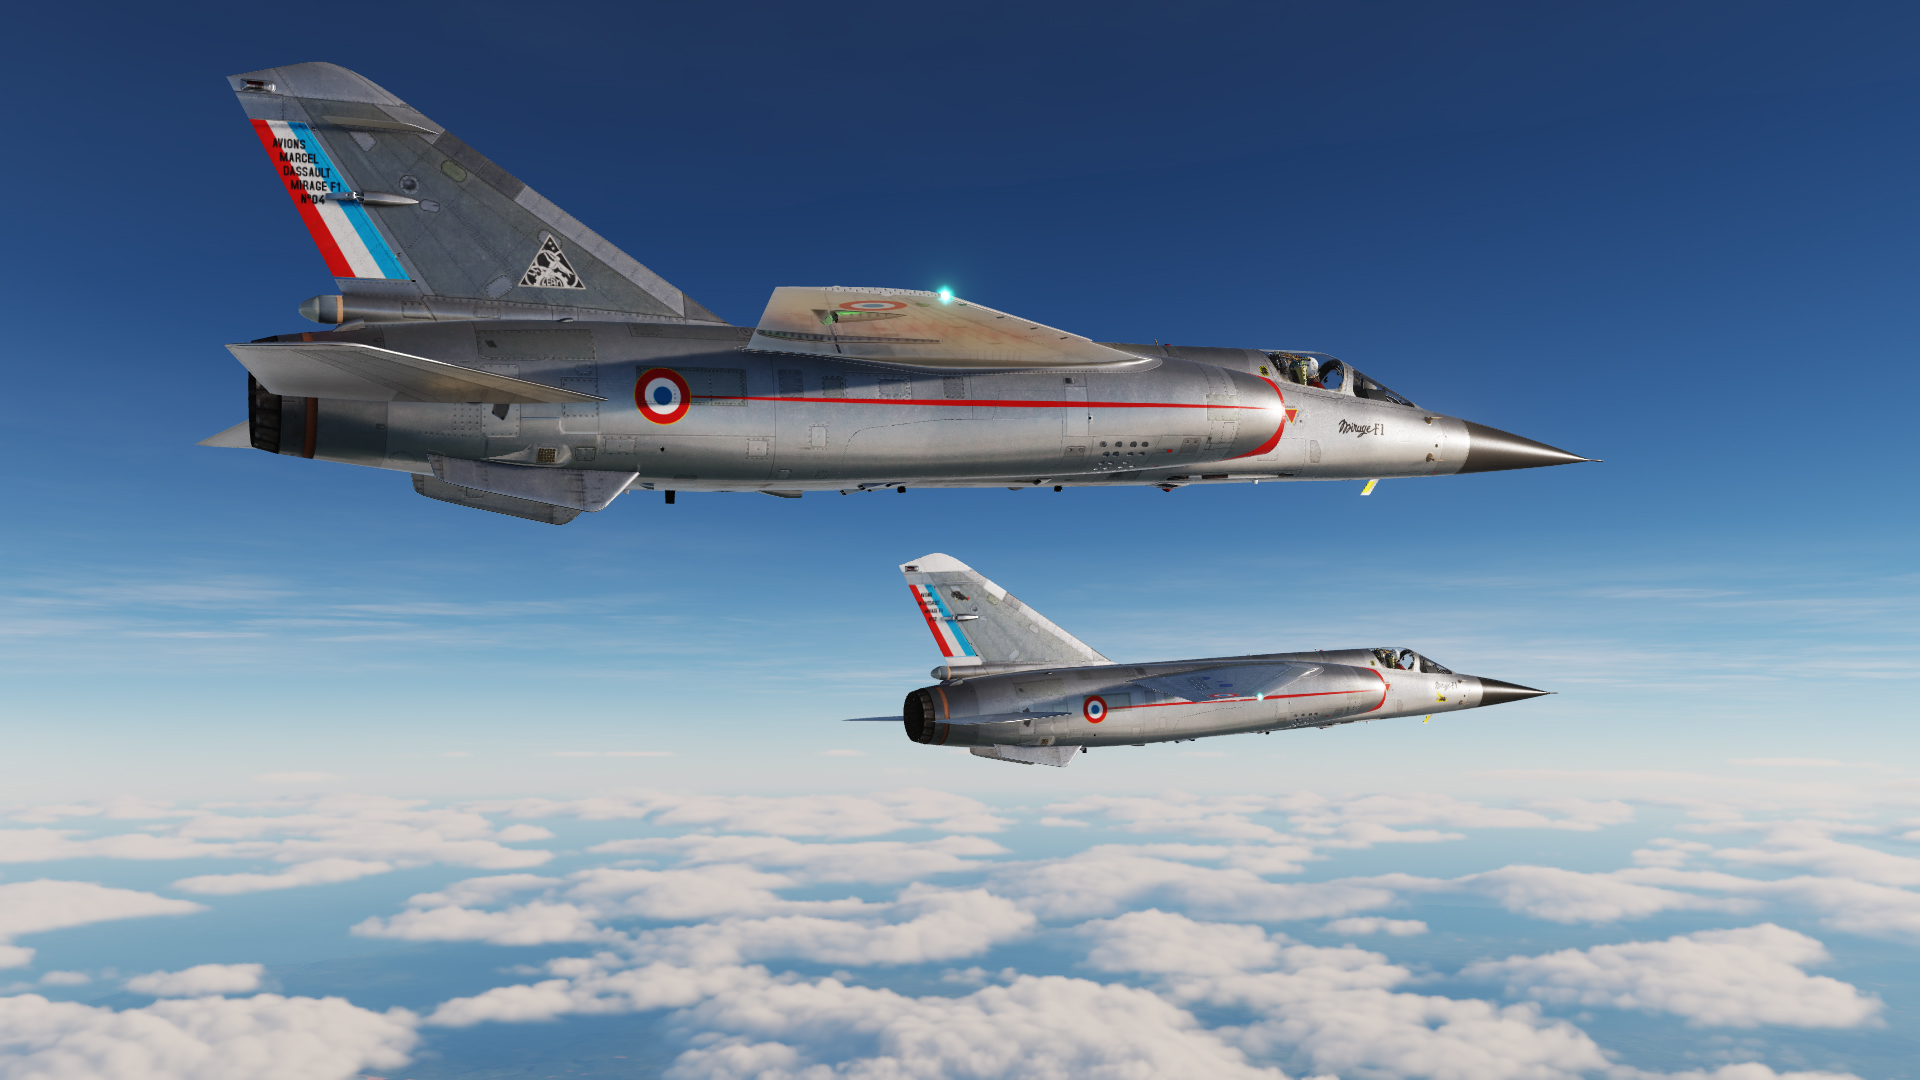 Mirage F1 prototypes N°02 and N°04